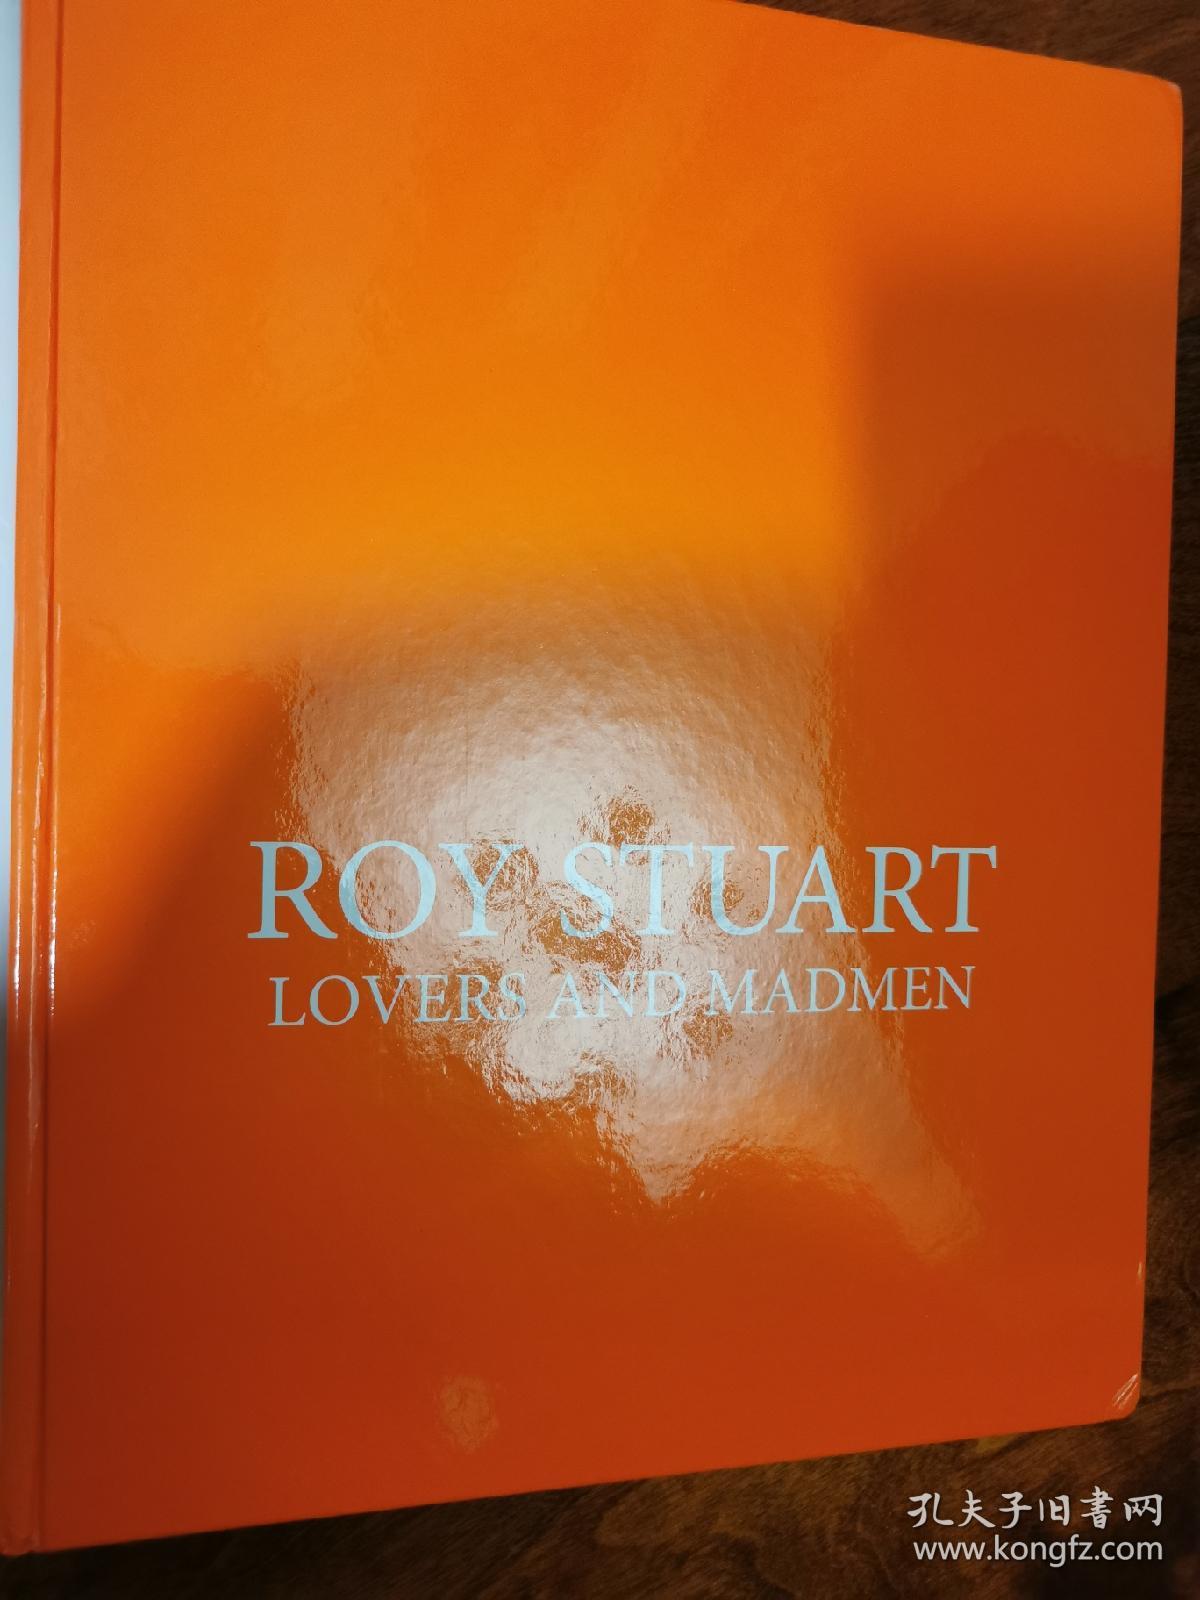 Roy stuart lovers and madmen